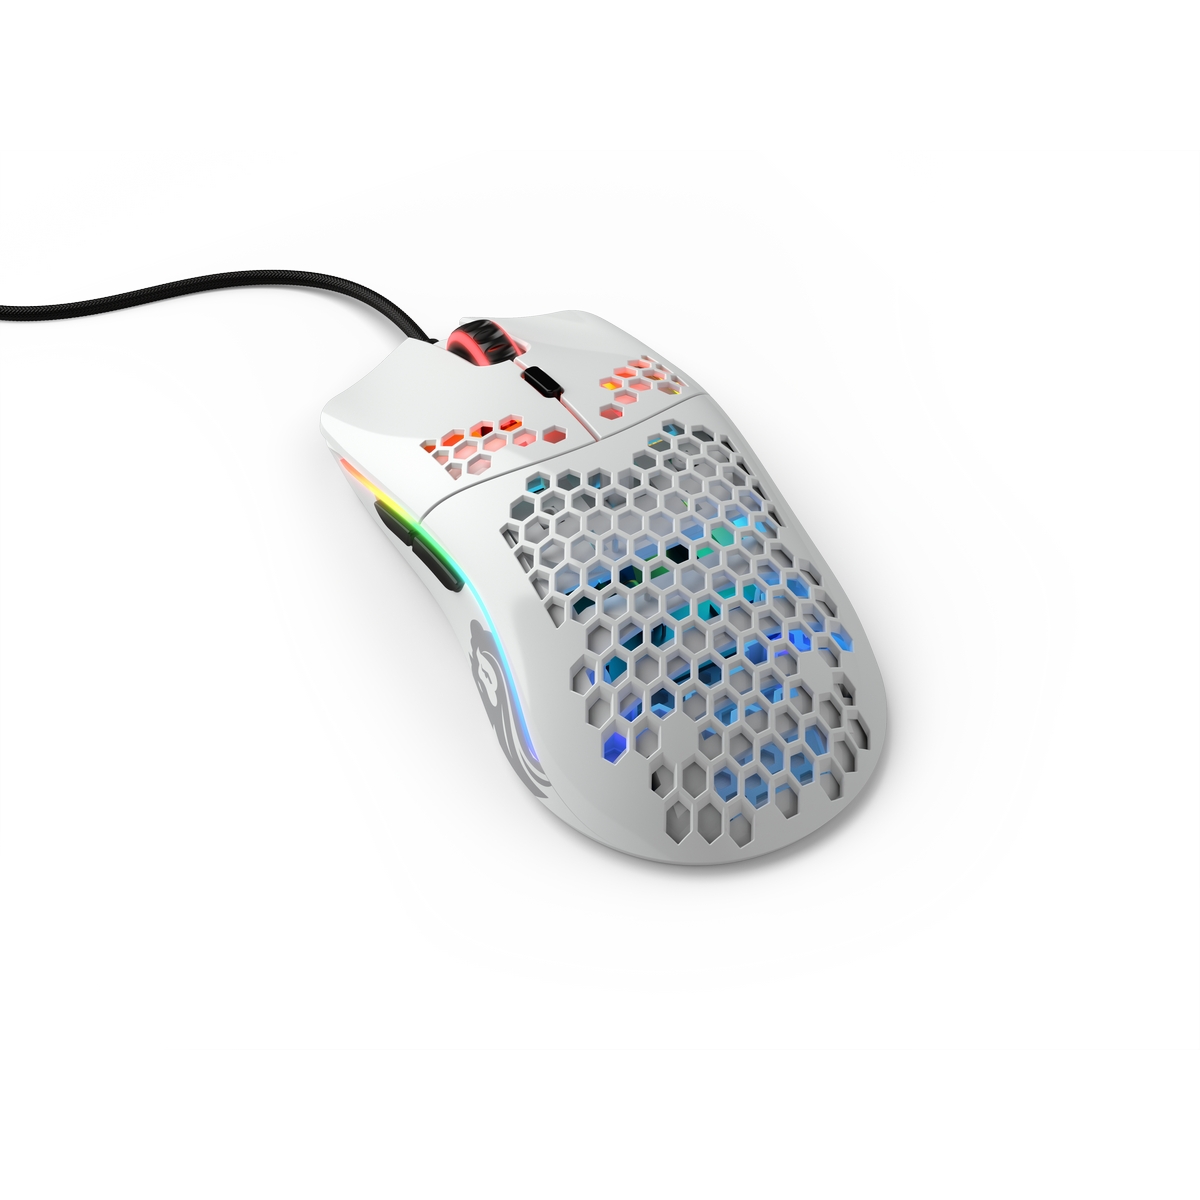 Glorious - Glorious Model O USB RGB Odin Gaming Mouse  - Glossy White (GO-GWHITE)